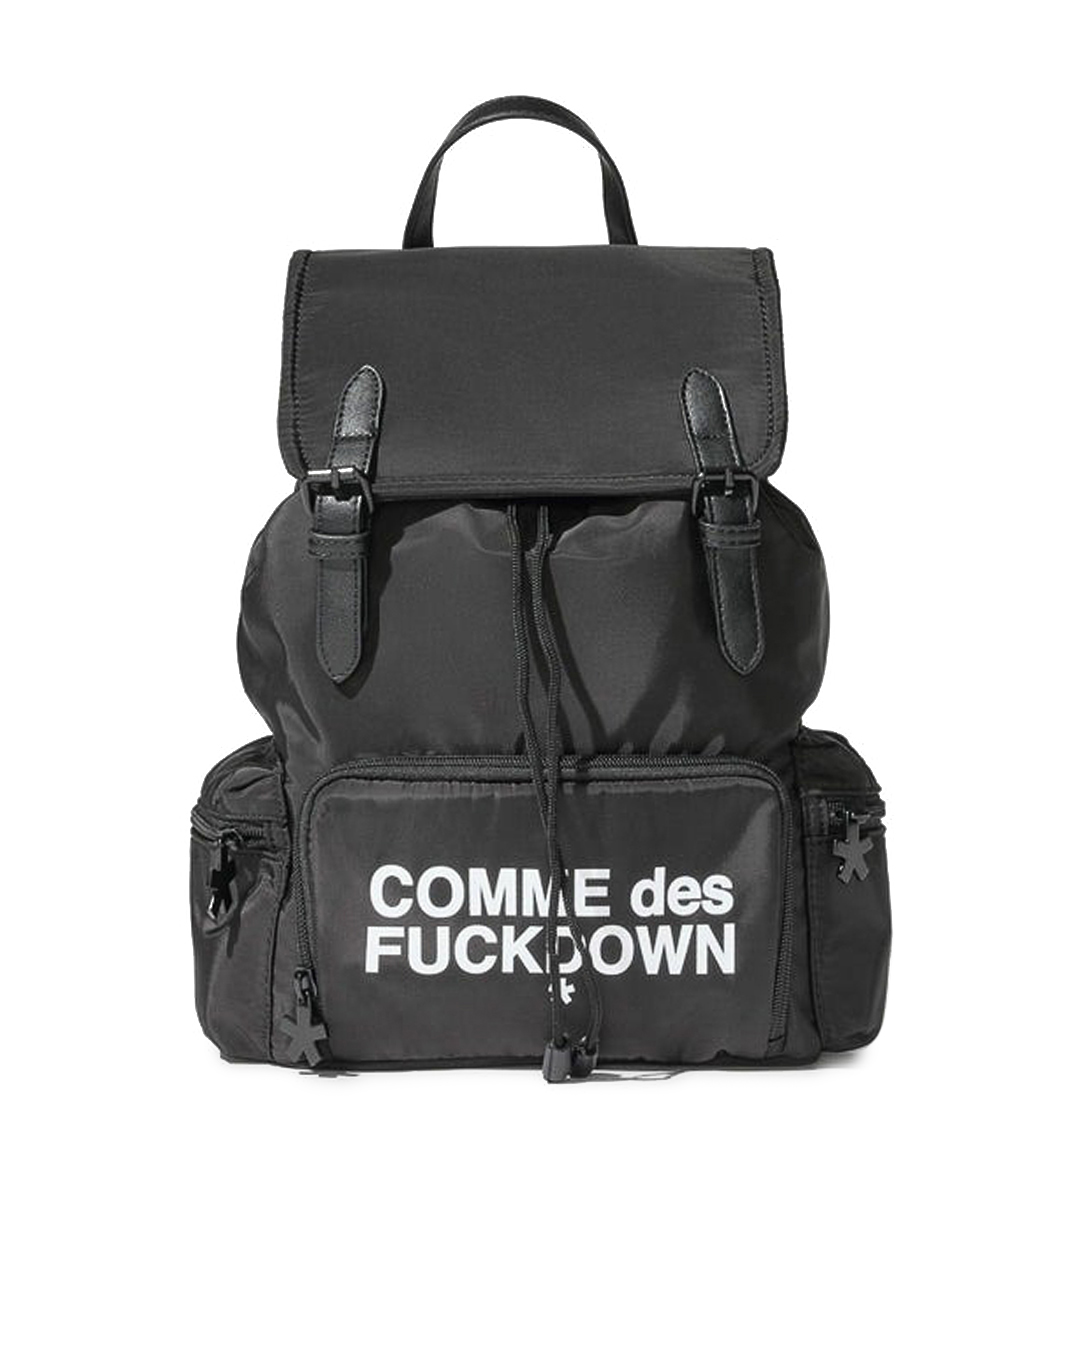 рюкзак COMME des FUCKDOWN brauberg рюкзак с отделением для ноутбука usb порт leader